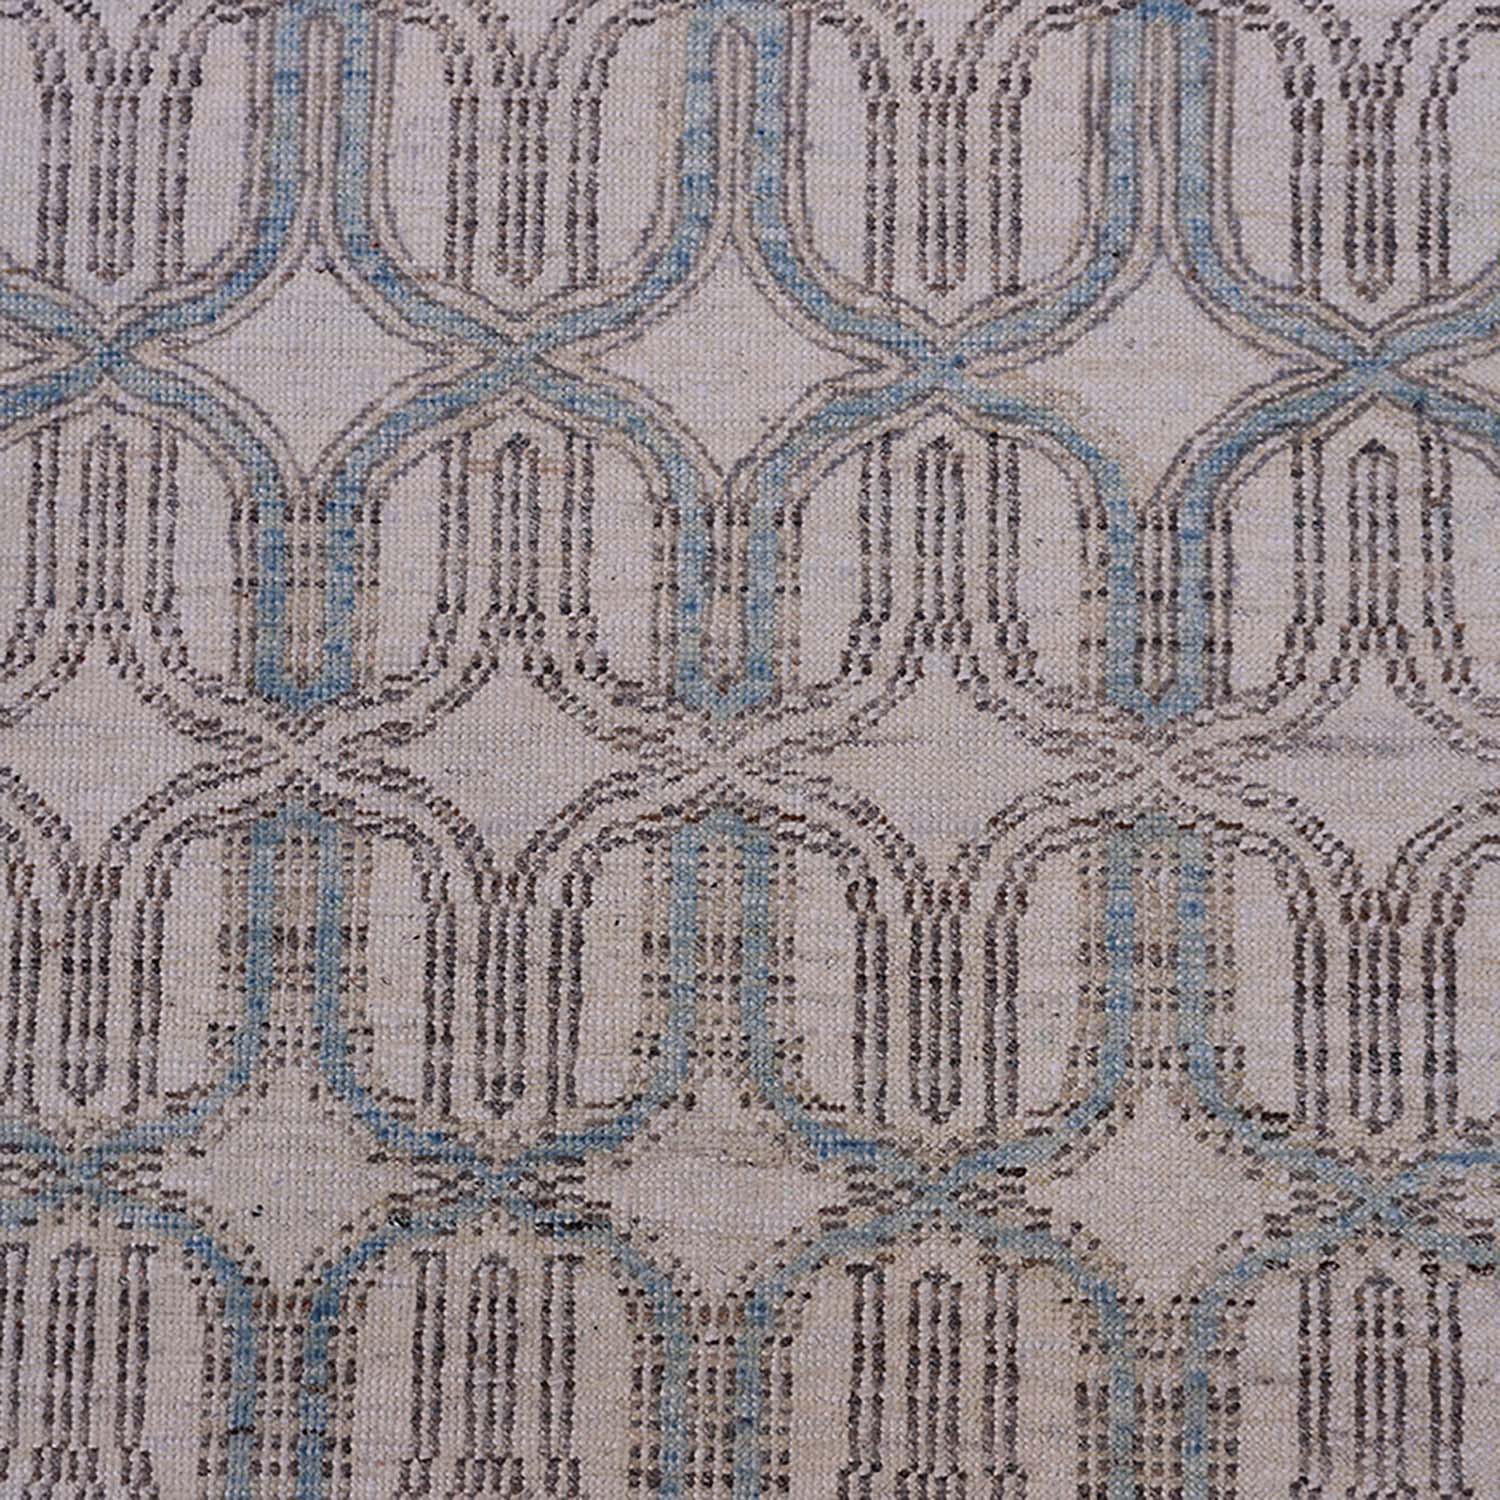 Close-up of intricate, symmetrical fabric design in neutral tones.